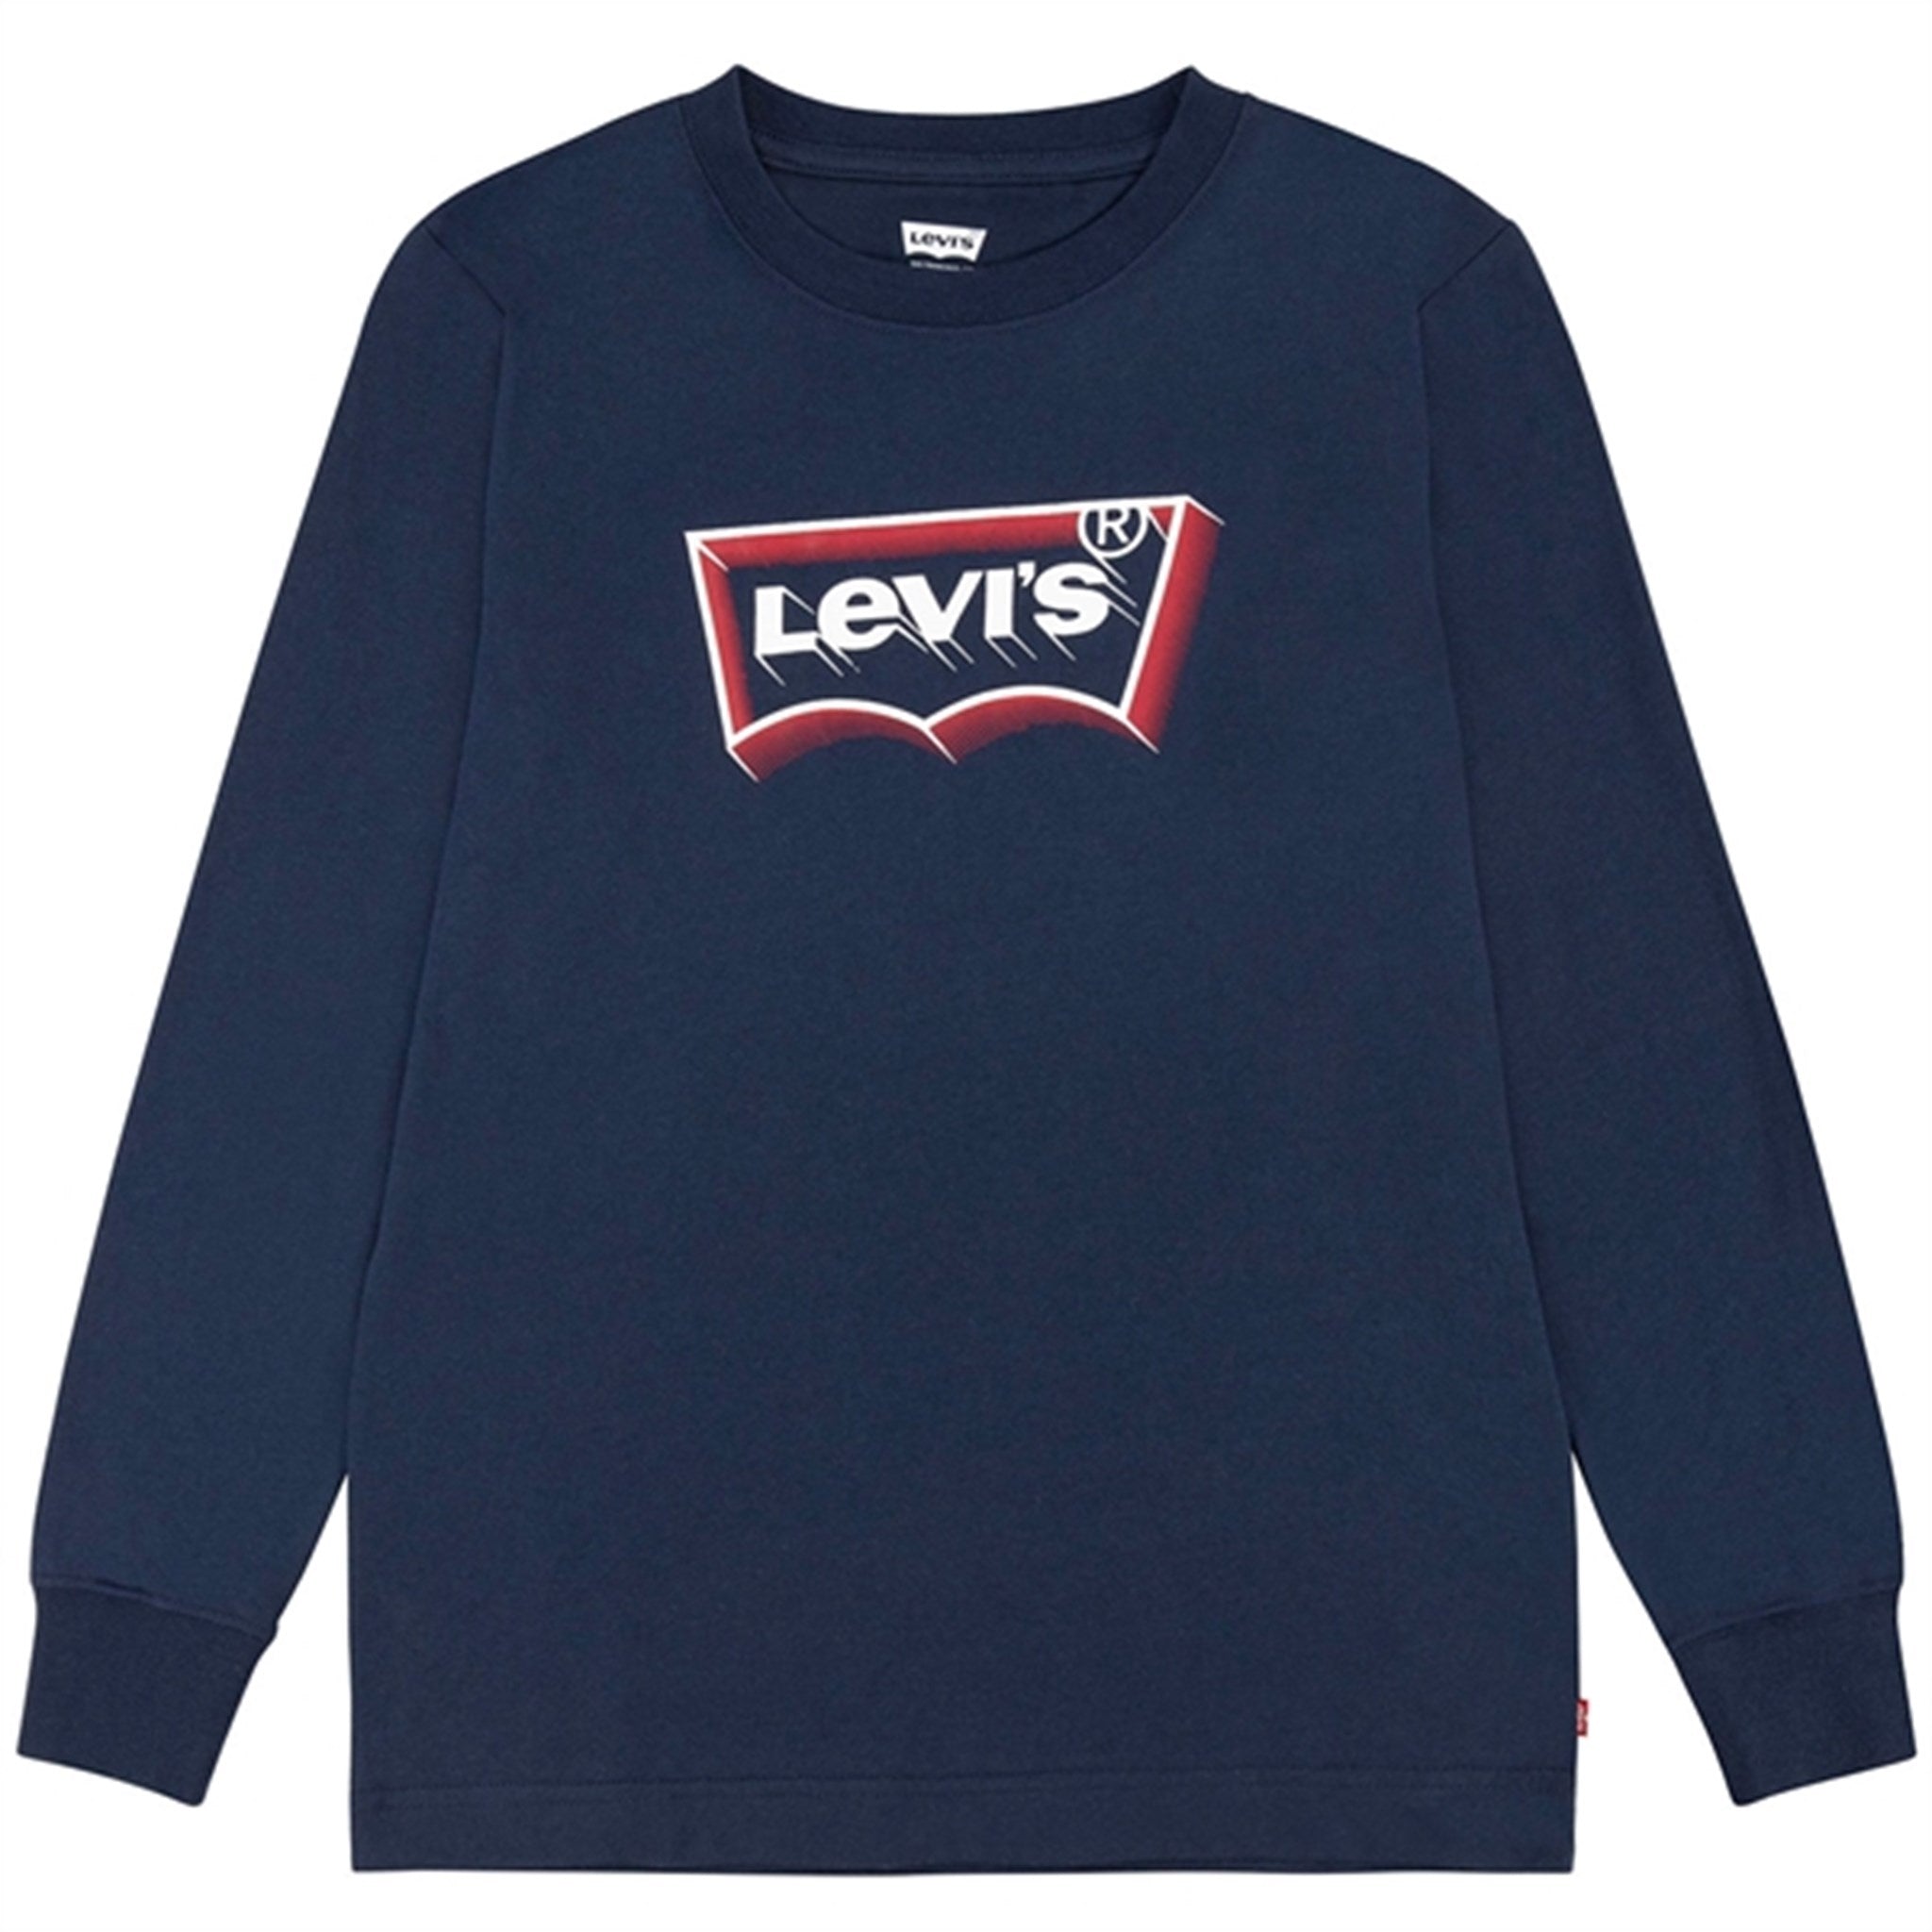 Levi's Bebis Glow Effect Batwing Long Sleeve T-Shirt Dress Blues